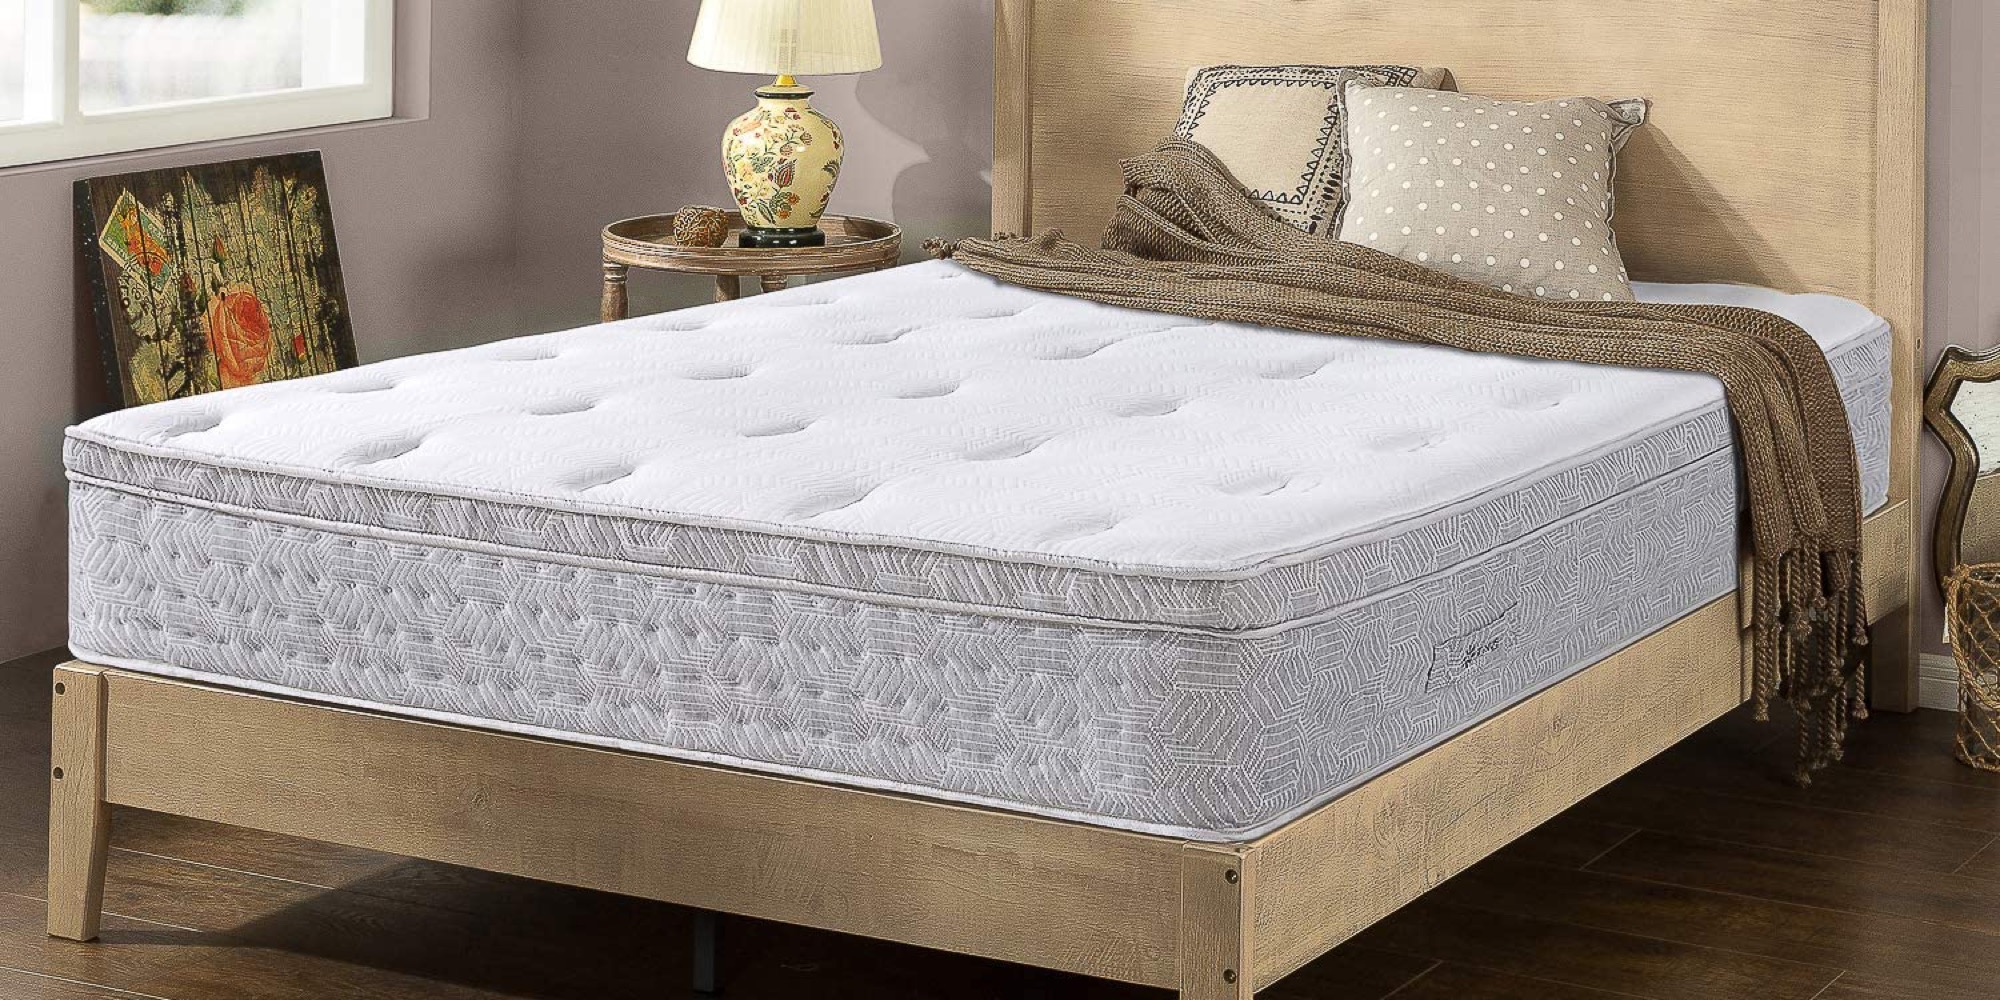 zinus 12 inch hybrid mattress review